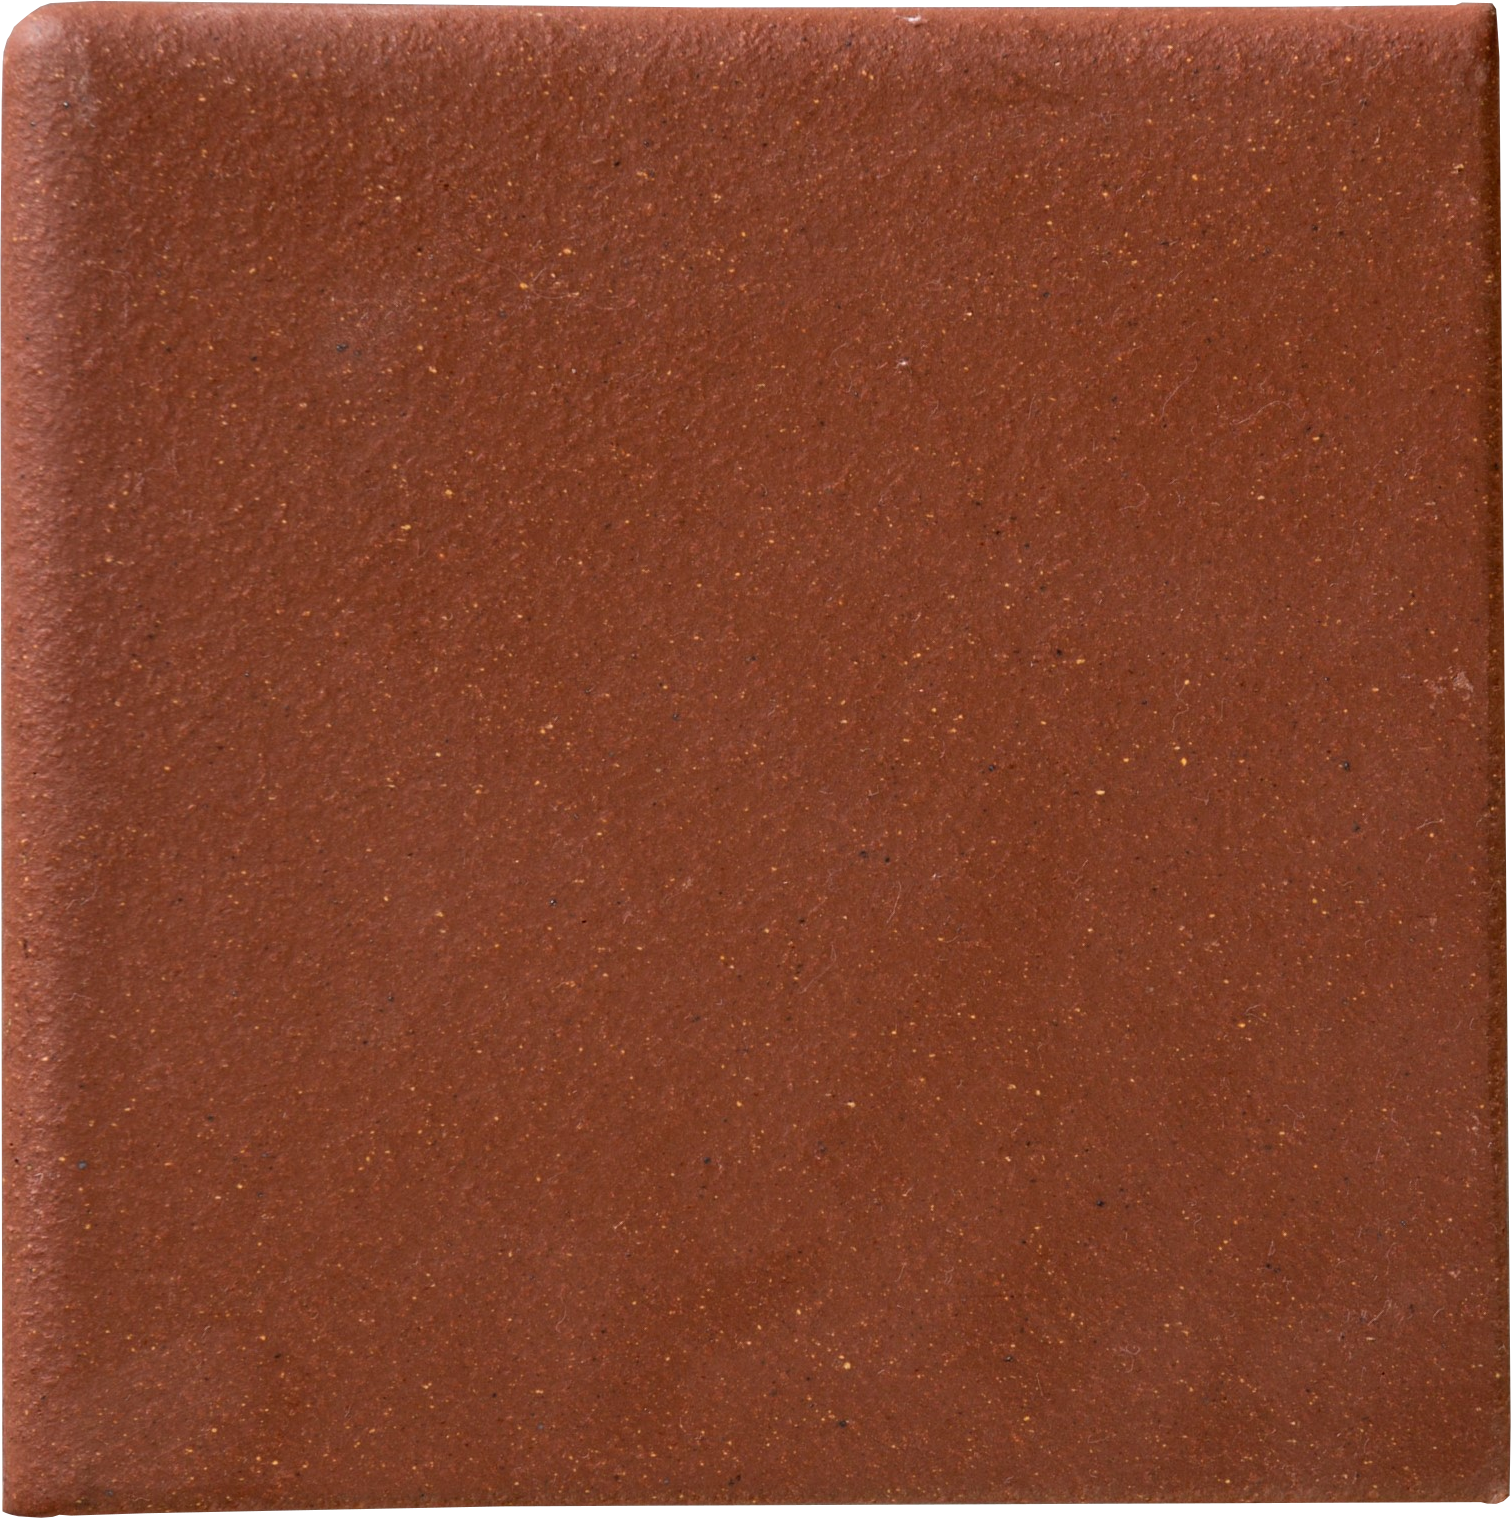 Diablo Red Textured Quarry - Sita Tile Distributors, Inc.